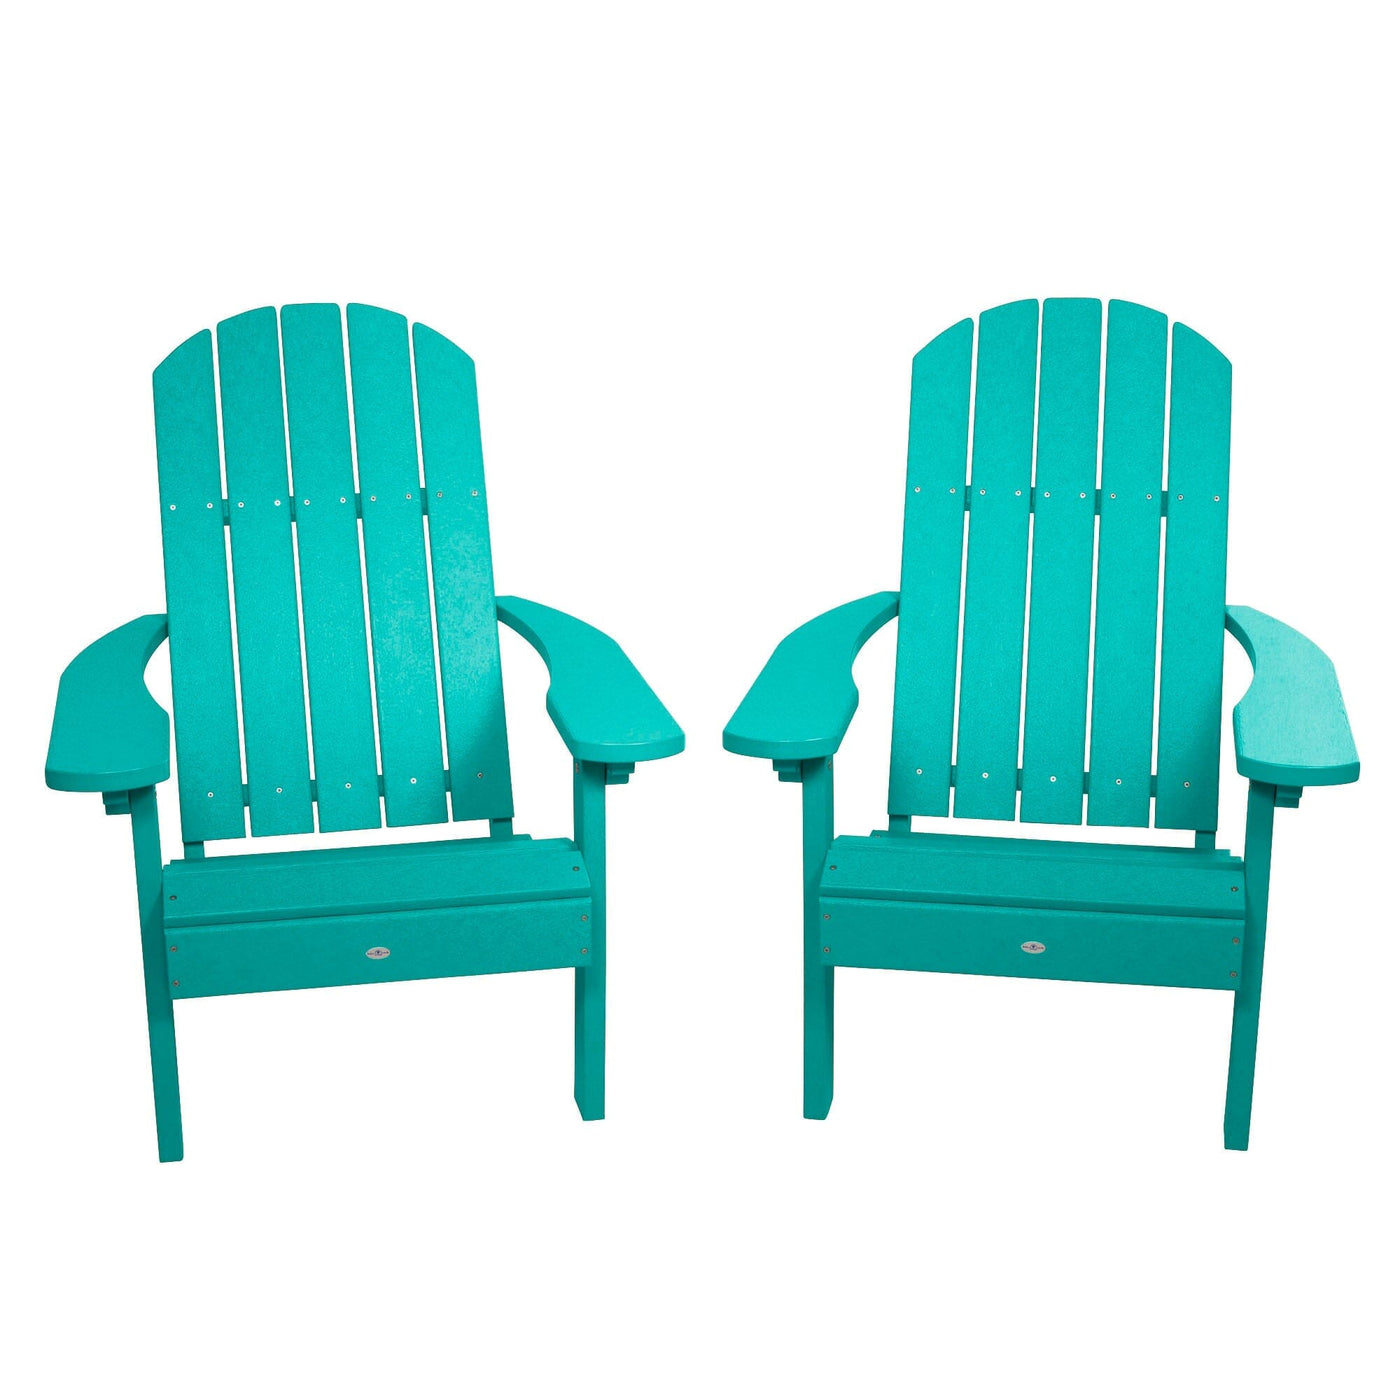 Cape Classic Adirondack Chair (Set of 2) Kitted Set Bahia Verde Outdoors Seaglass Blue 